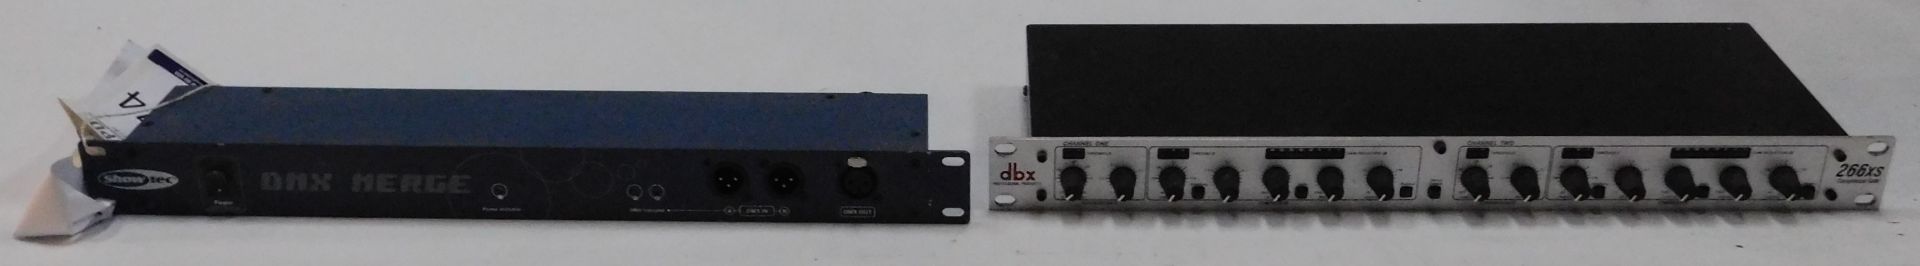 Showtec DMX Merge & DBX Professional Products 266XS Compressor/Gate (Location: Brentwood. Please